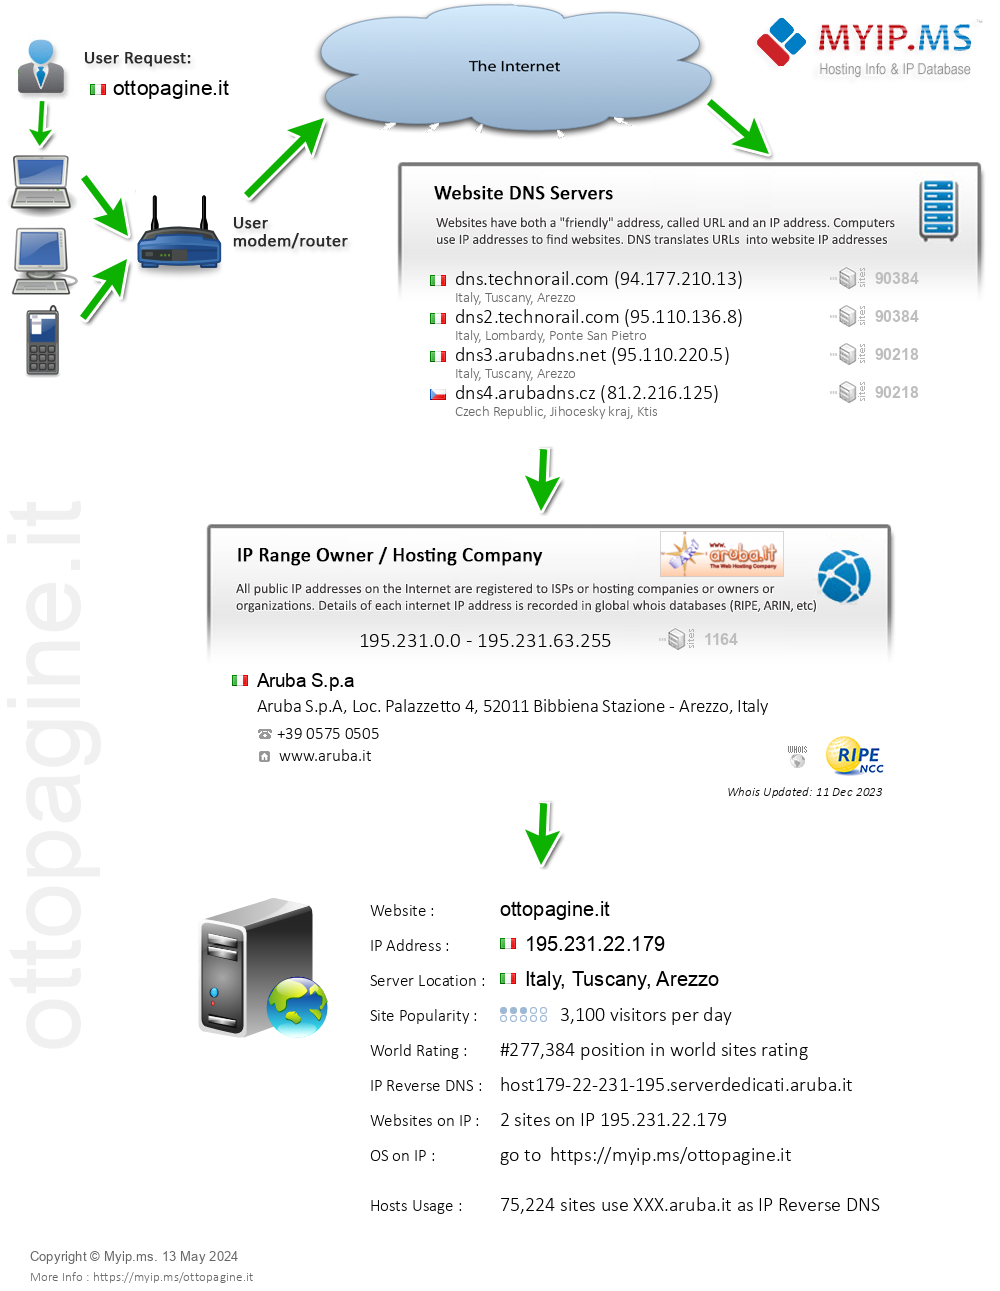 Ottopagine.it - Website Hosting Visual IP Diagram